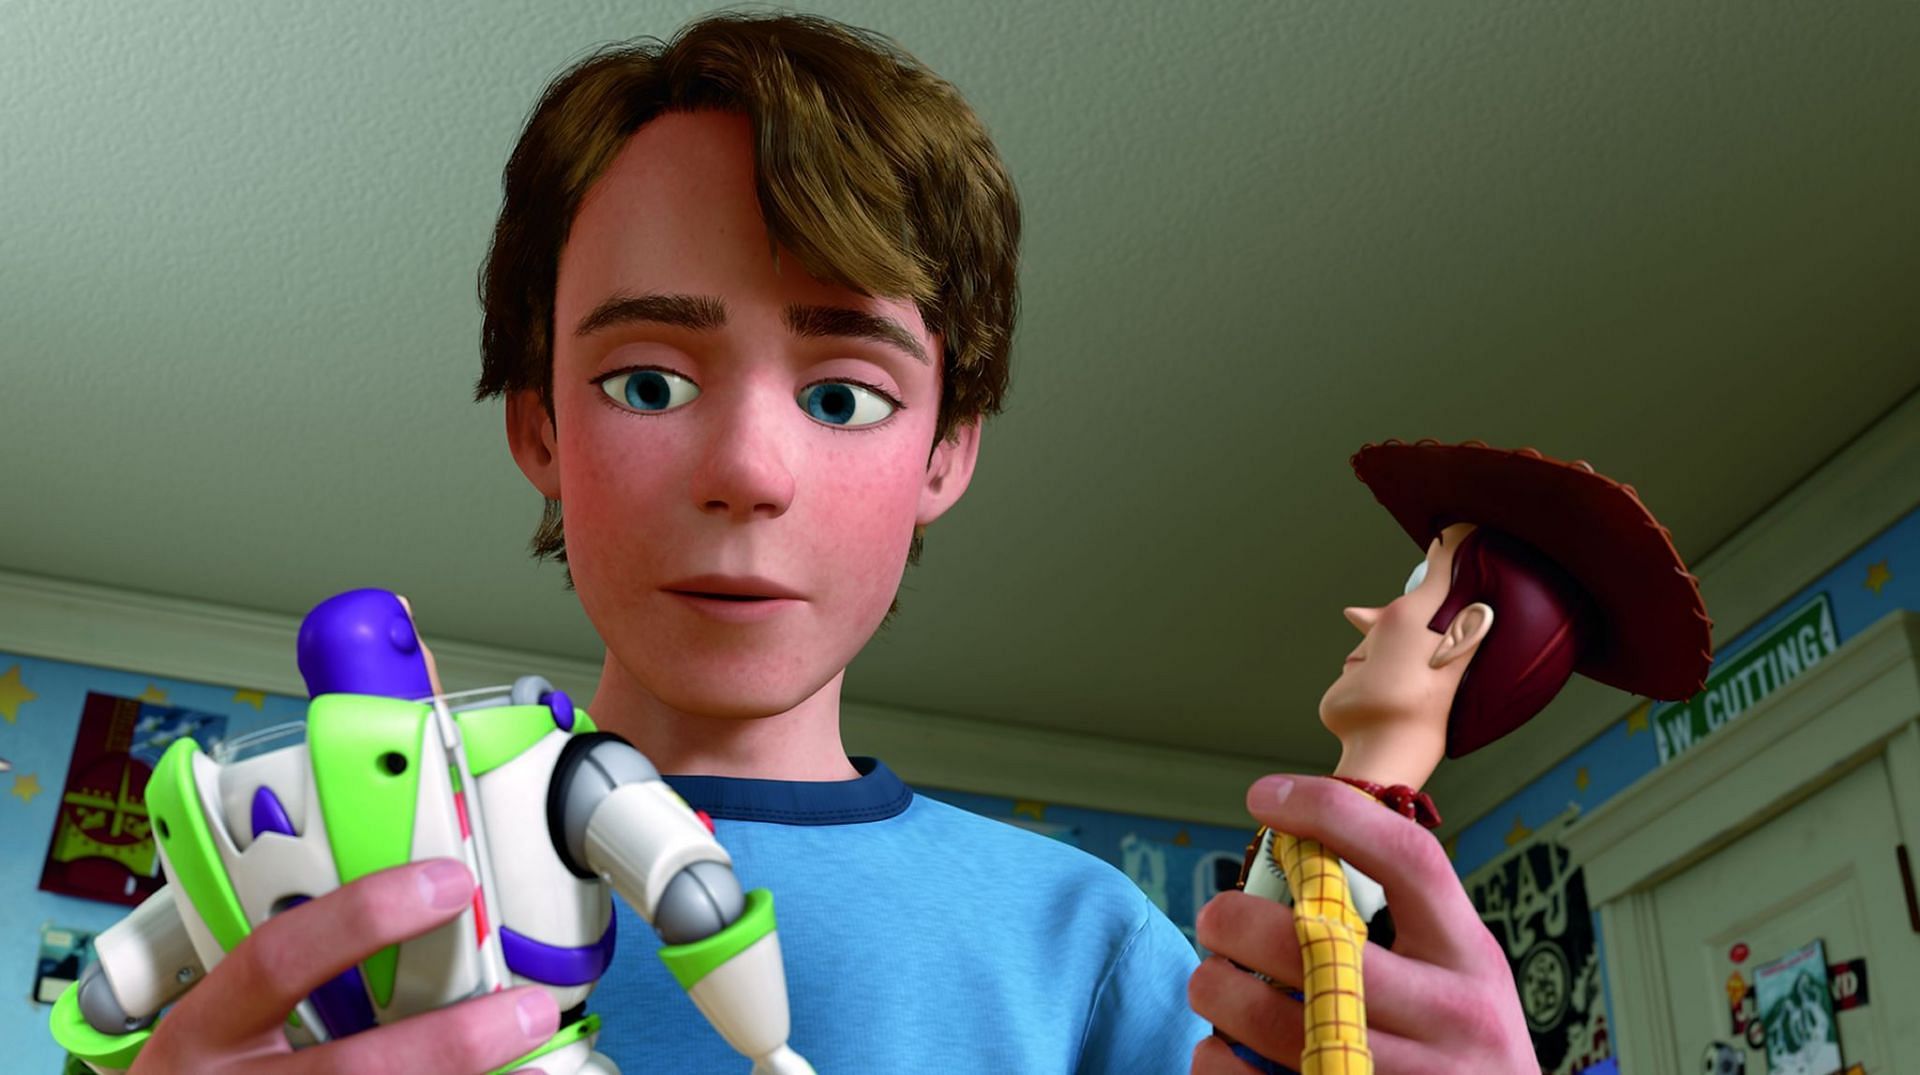 A still from Toy Story 3 (image via Disney/Pixar)